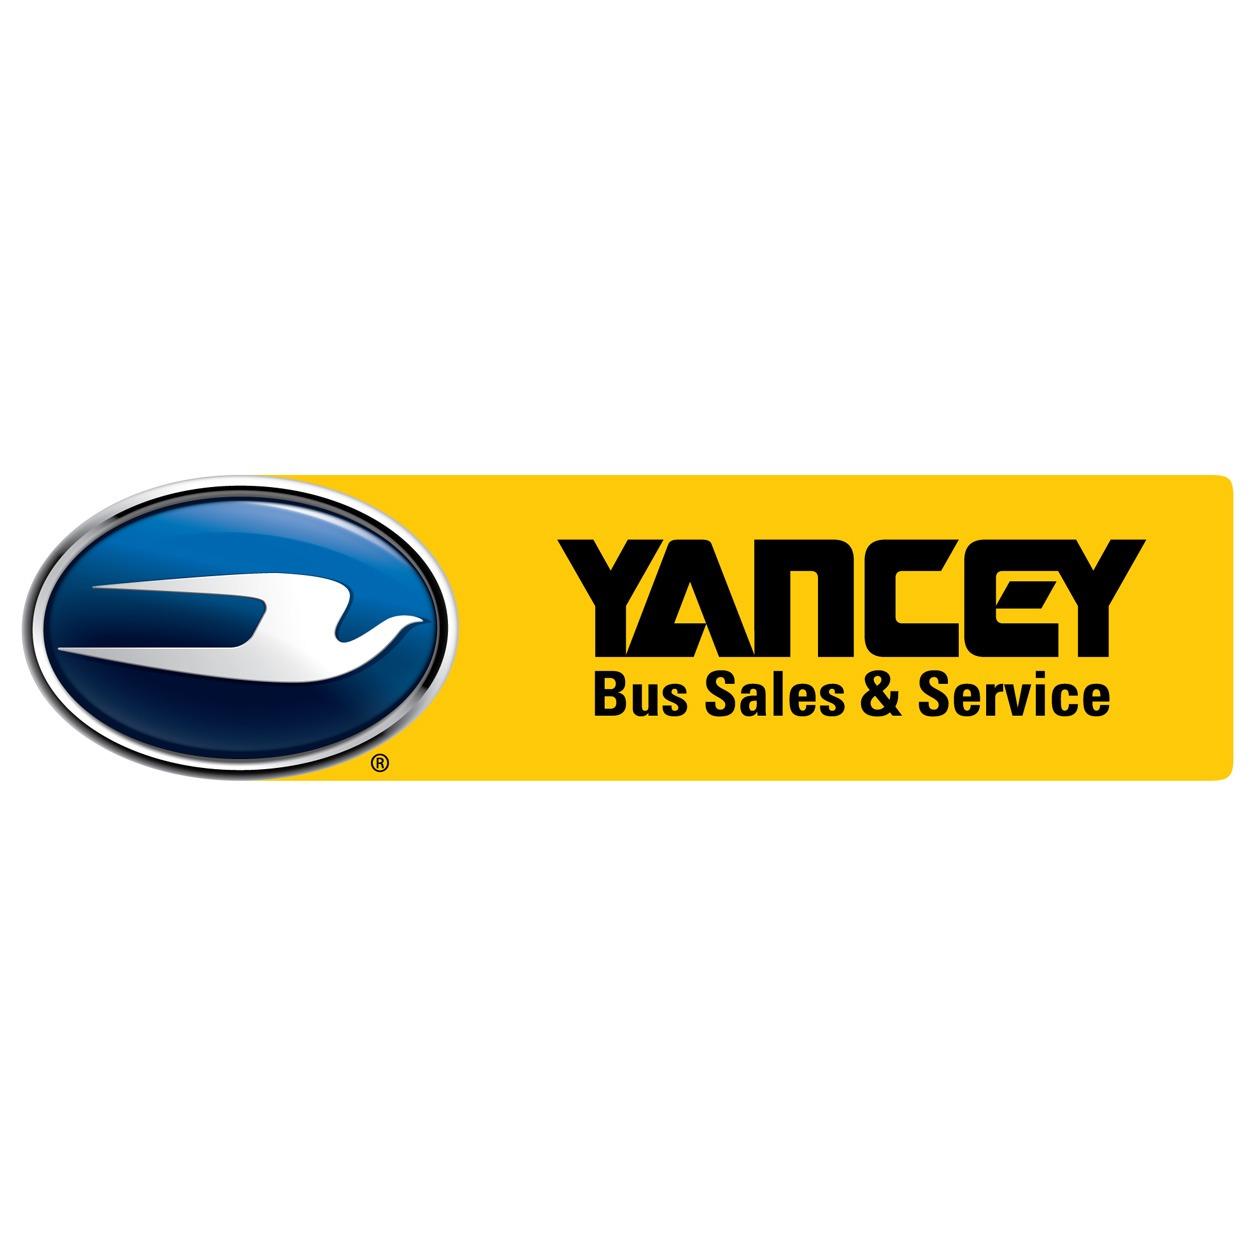 Yancey Bus Sales & Service Macon (478)785-5100